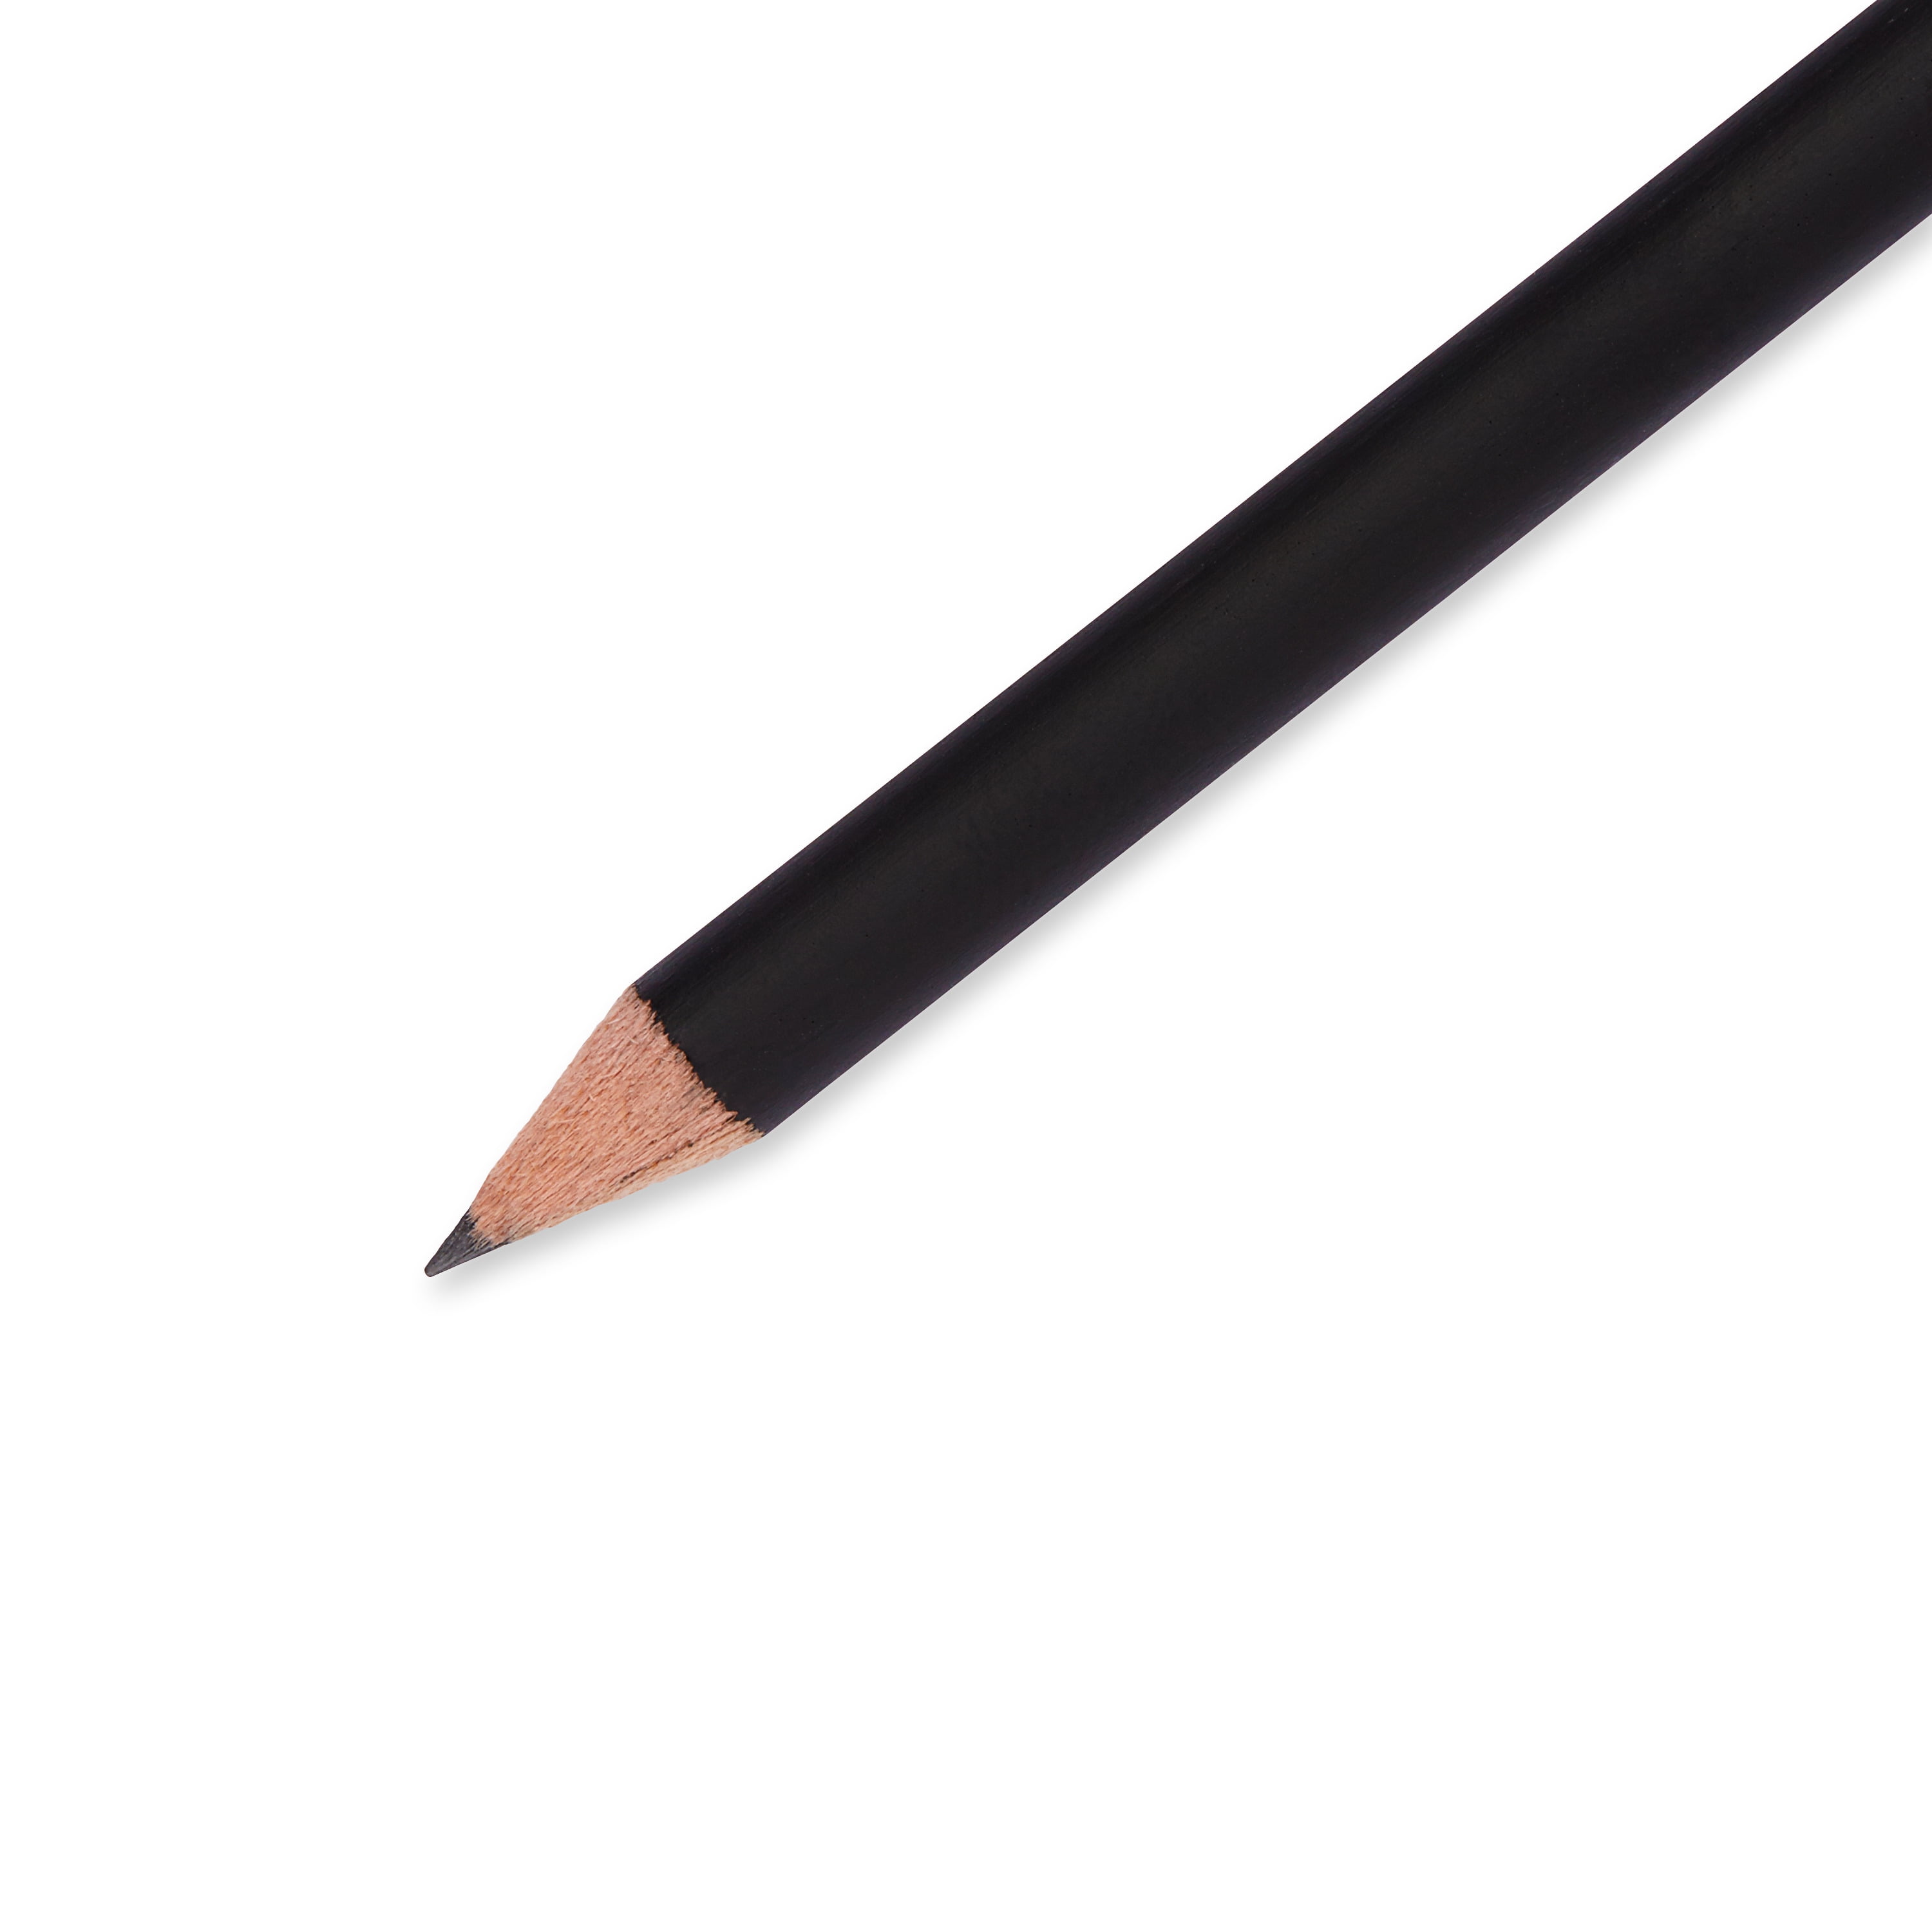 Paper Mate Mirado Black Warrior Pencils Black HB #2 12 Count & X-Acto  Sharpener